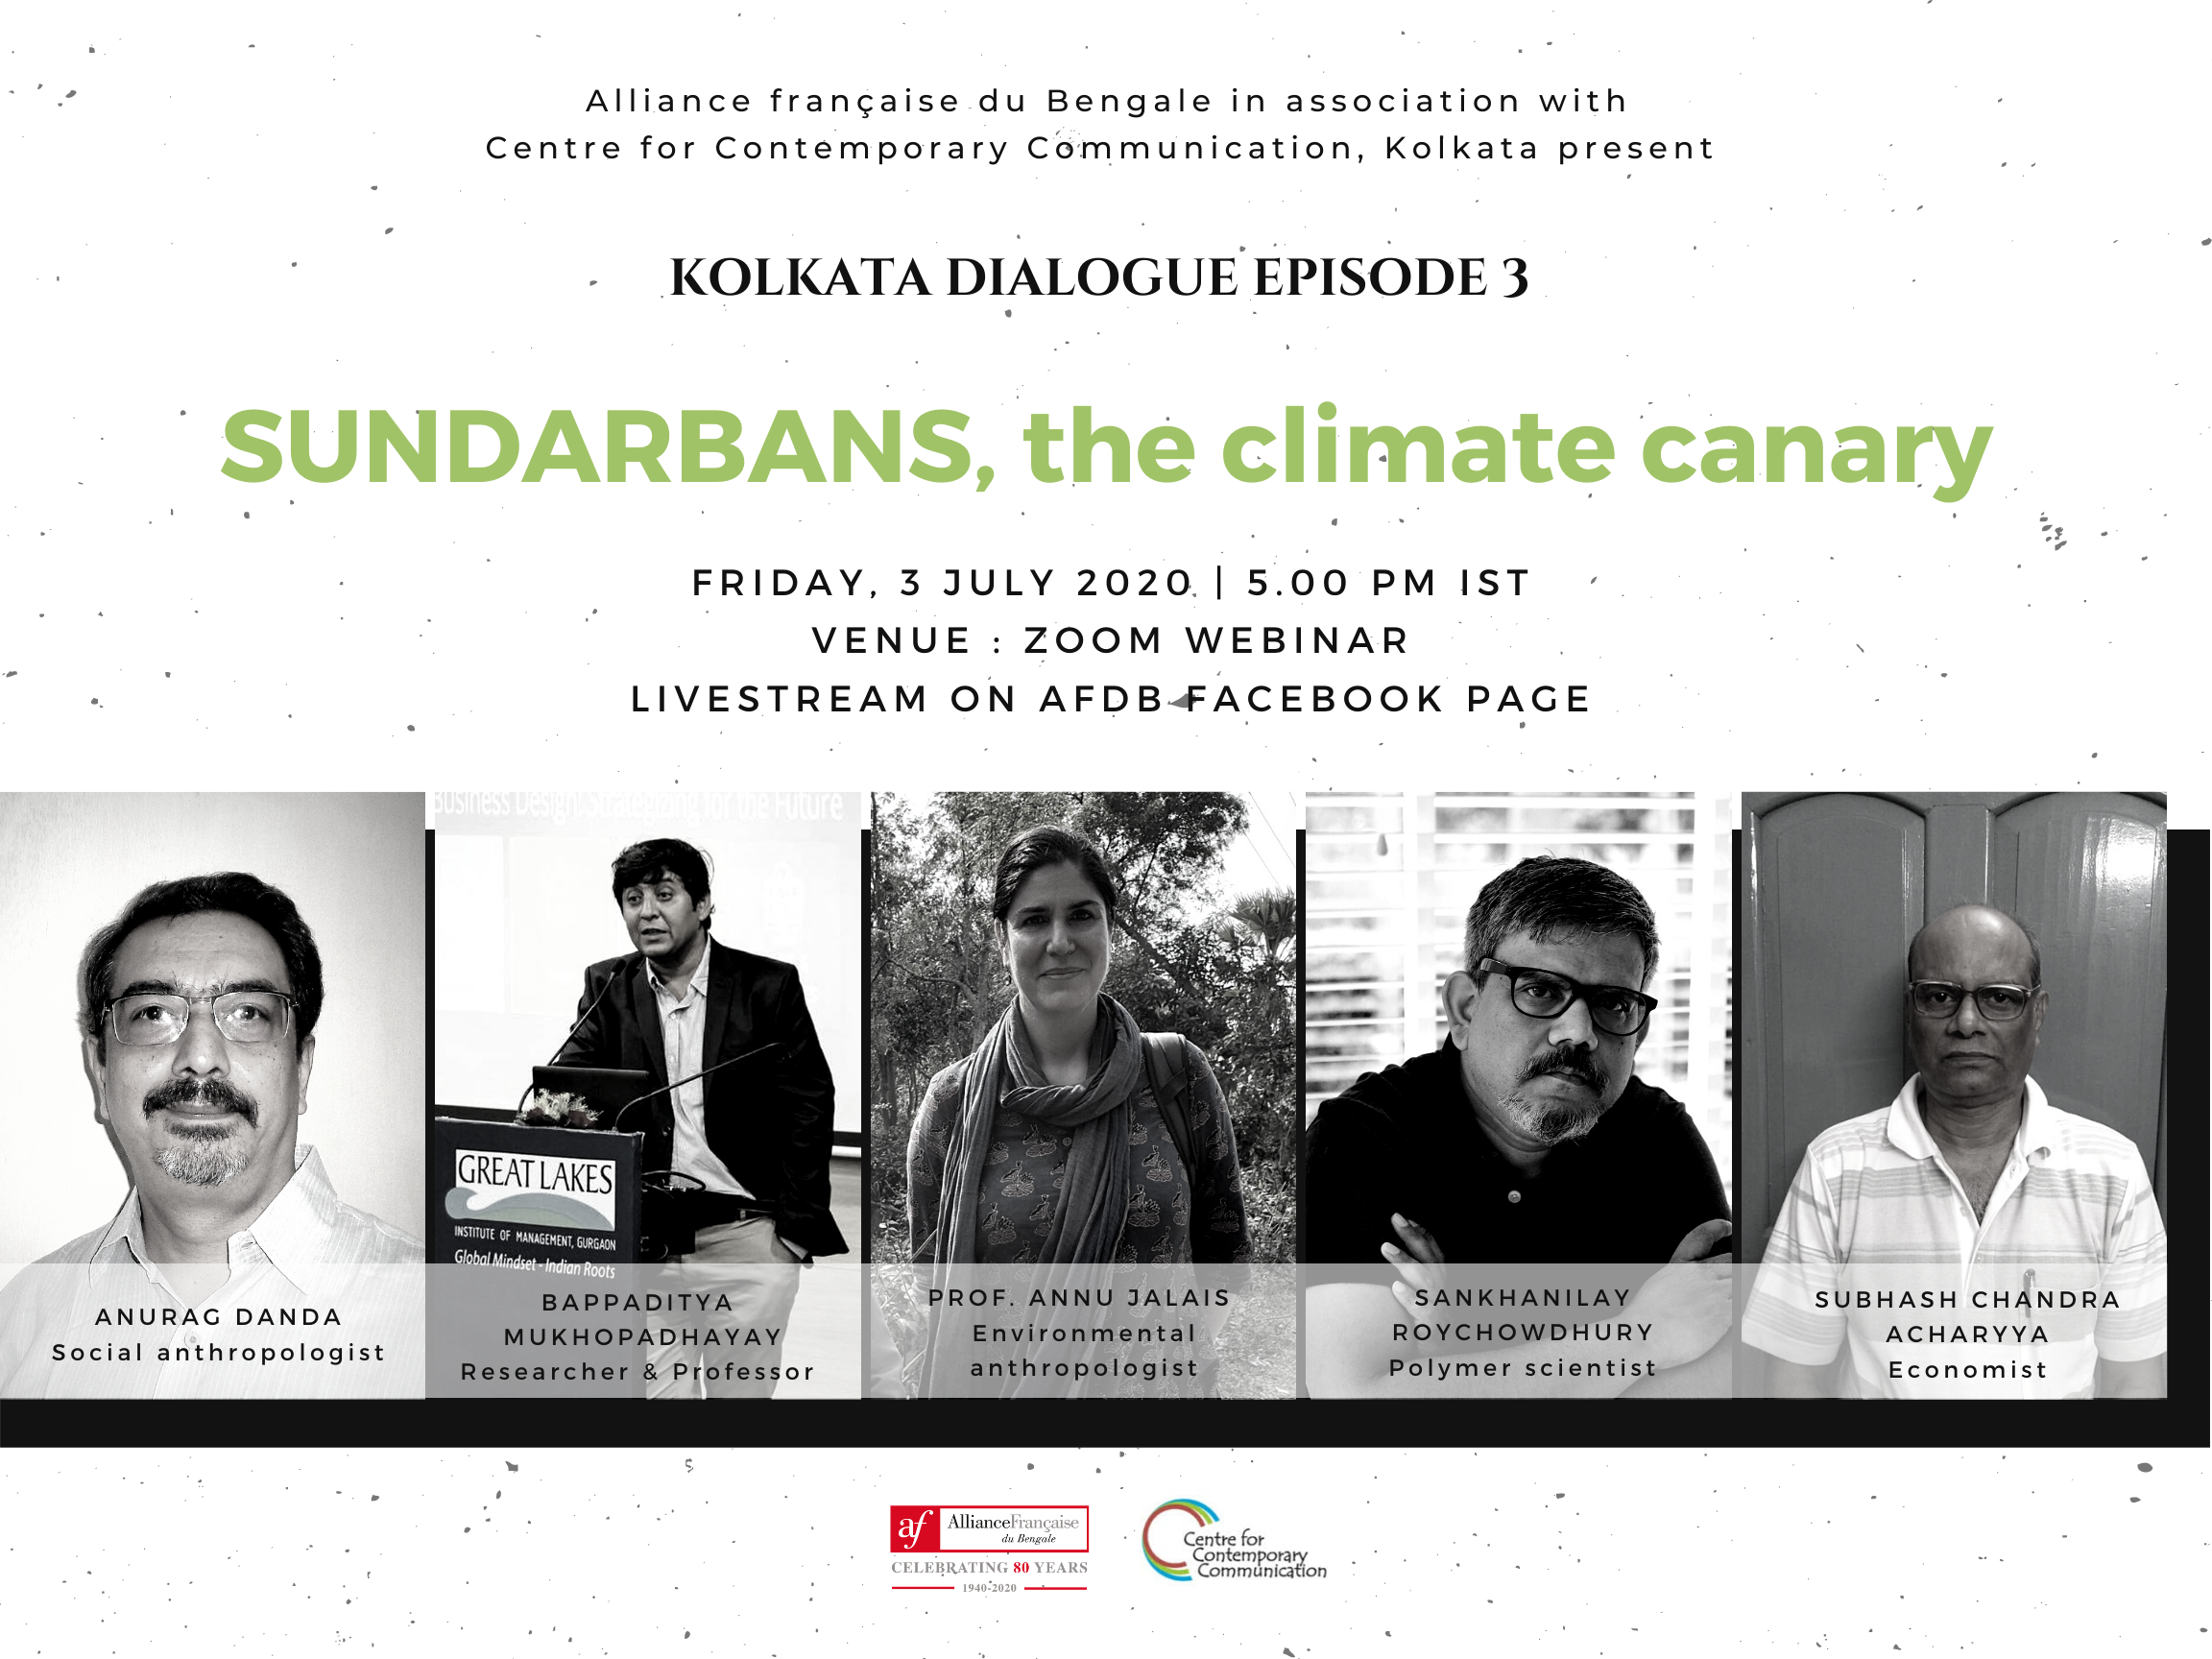 Sundarbans, the climate canary - Kolkata Dialogue Episode 3